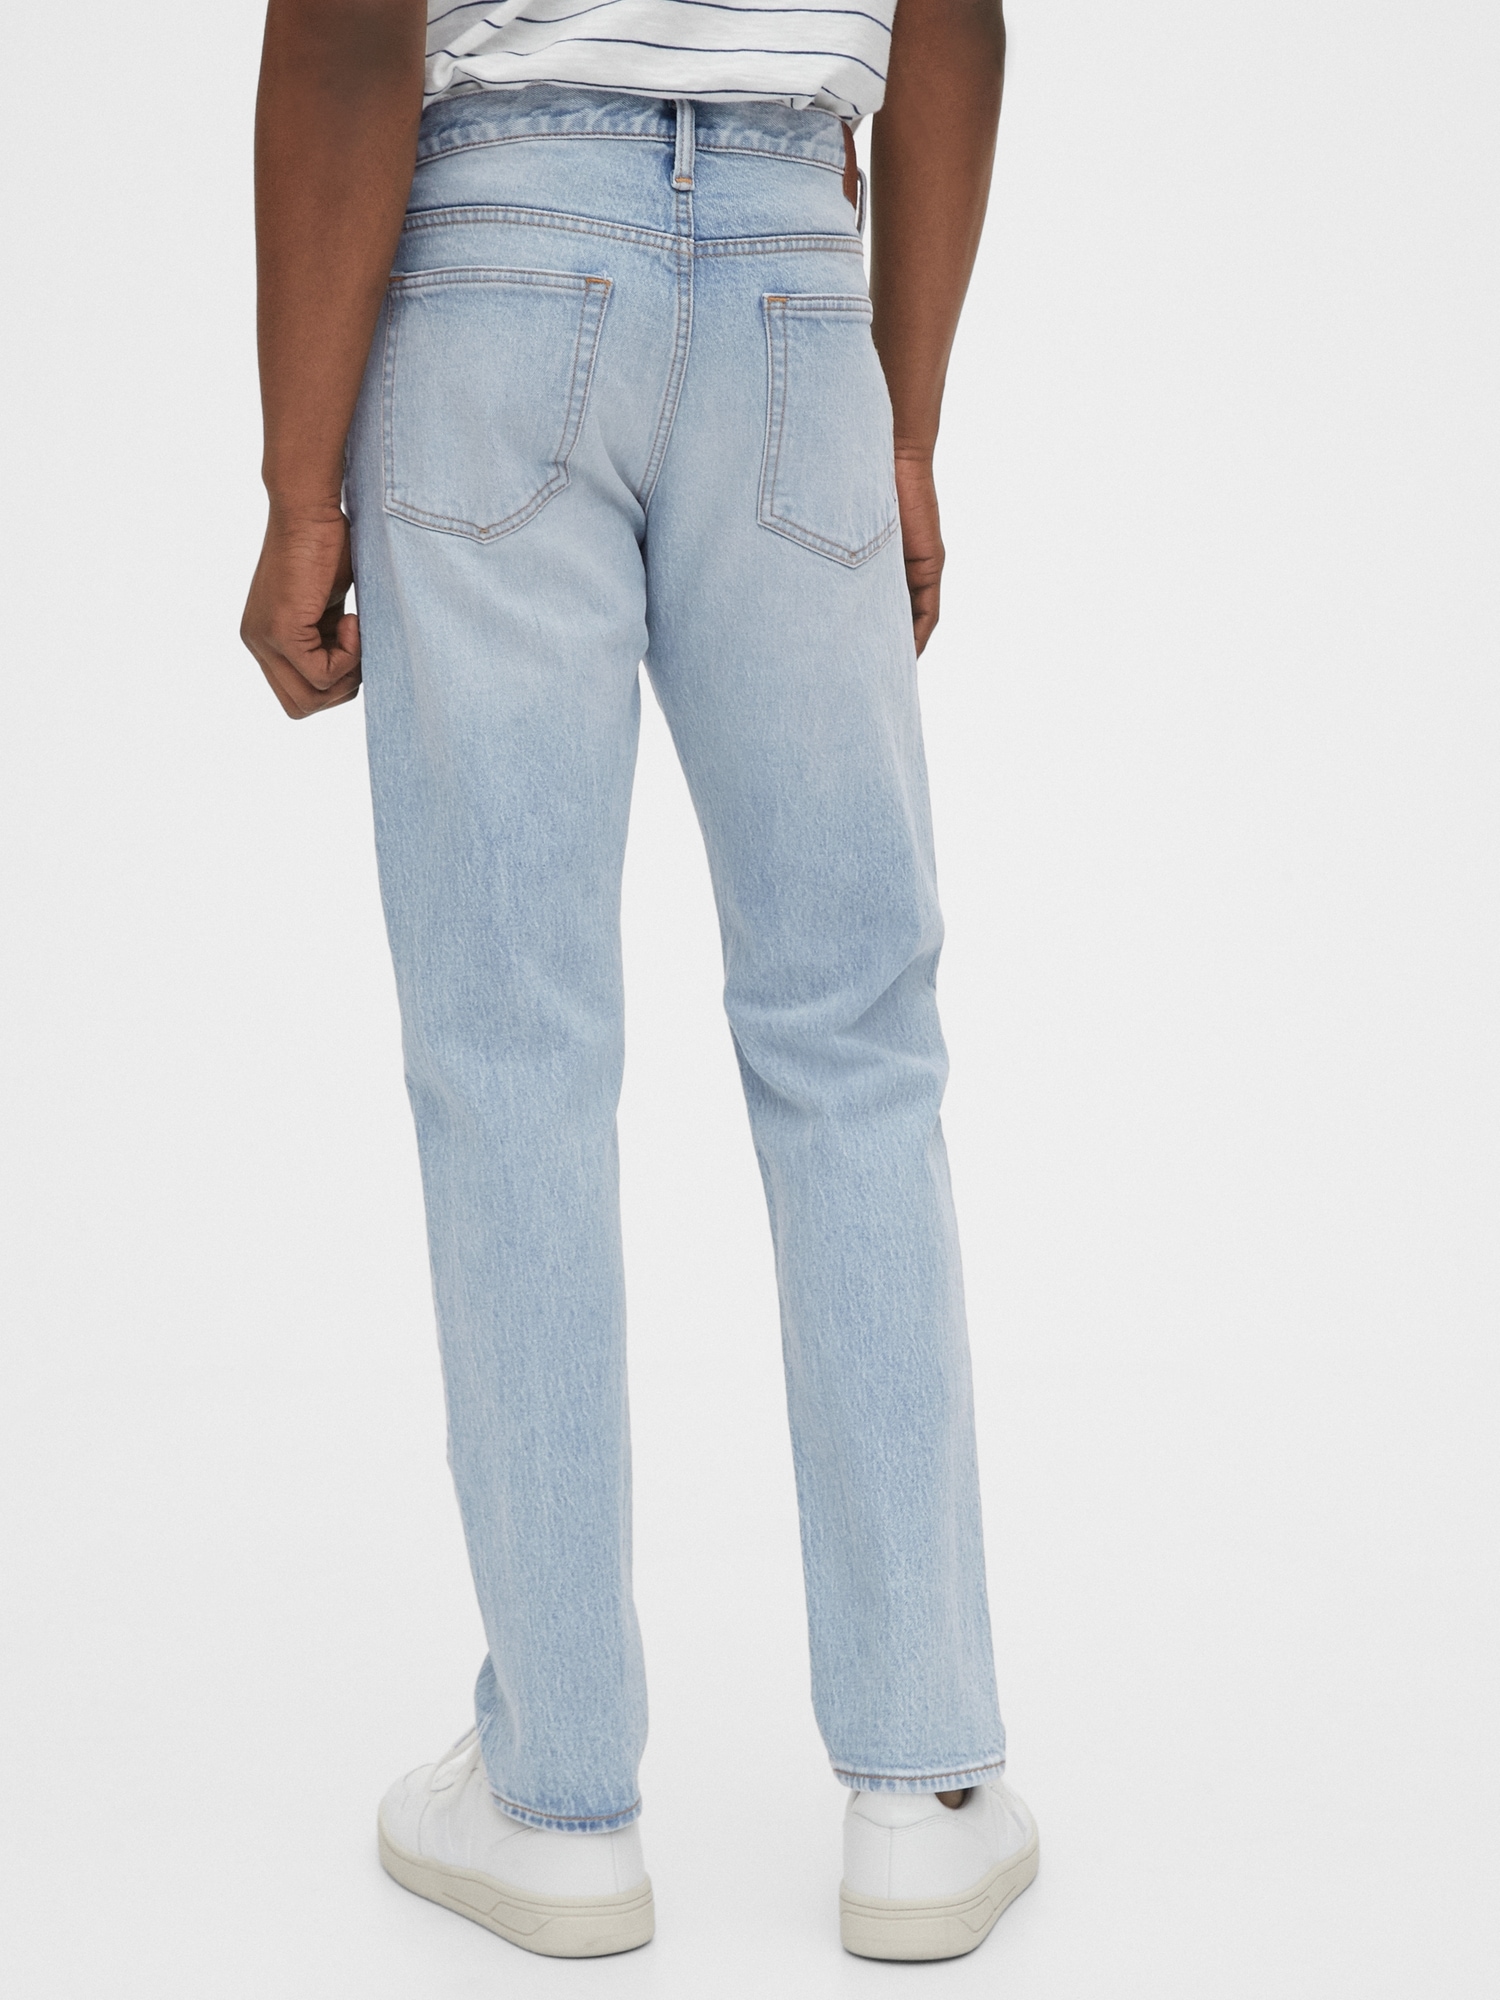 Slim Taper Jeans with GapFlex | Gap